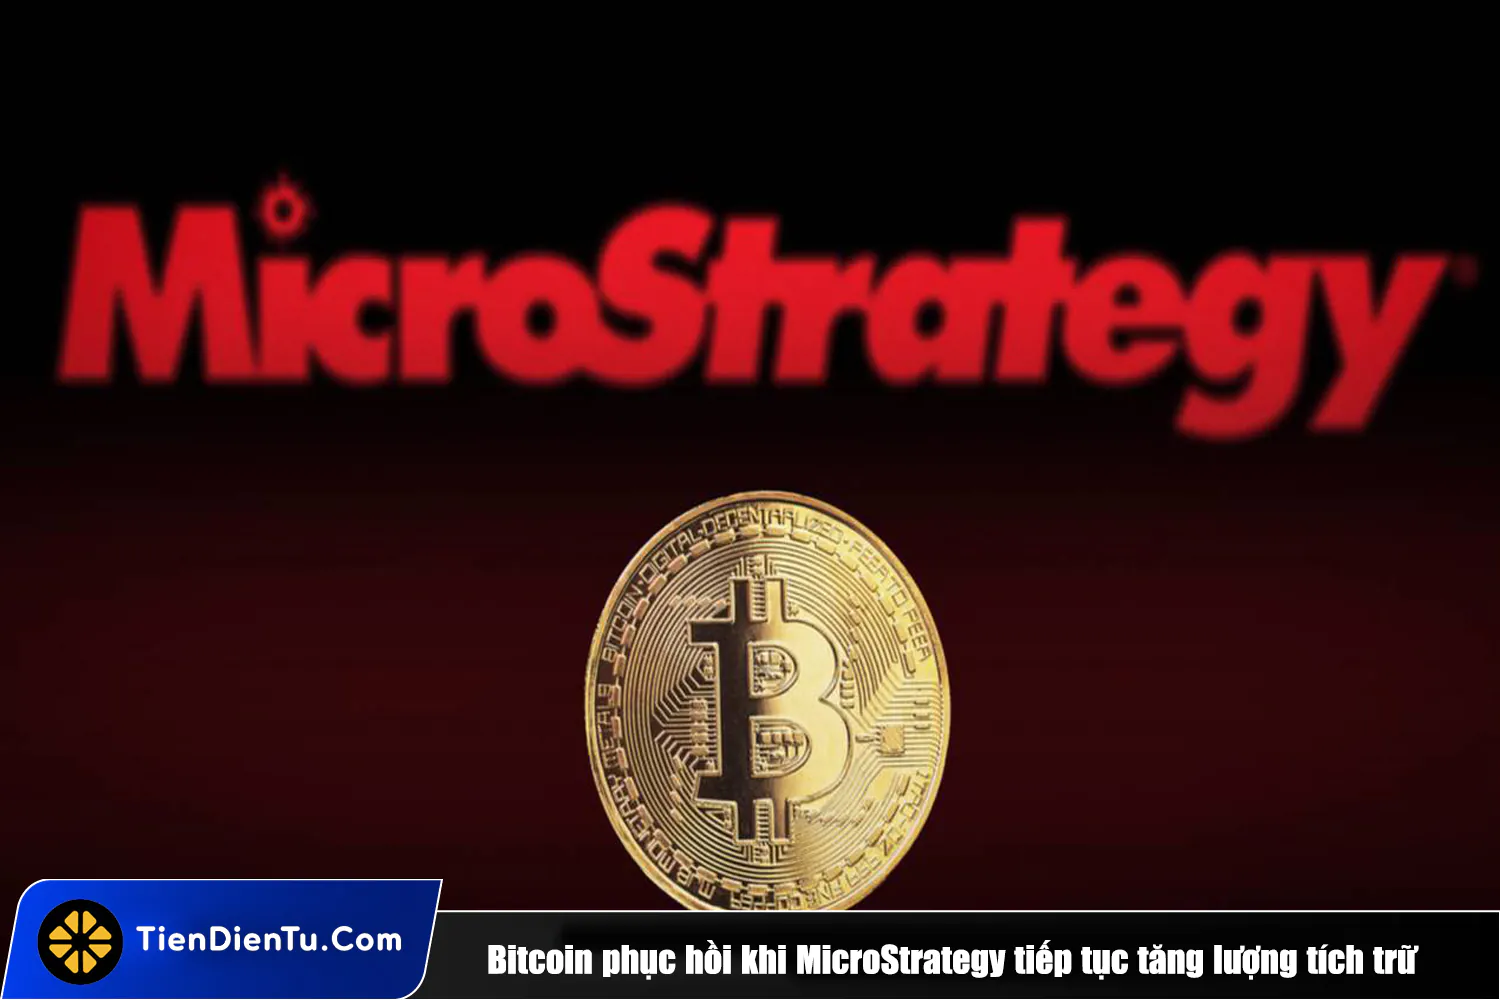 Tiendientu bitcoin phuc hoi khi microstrategy mua